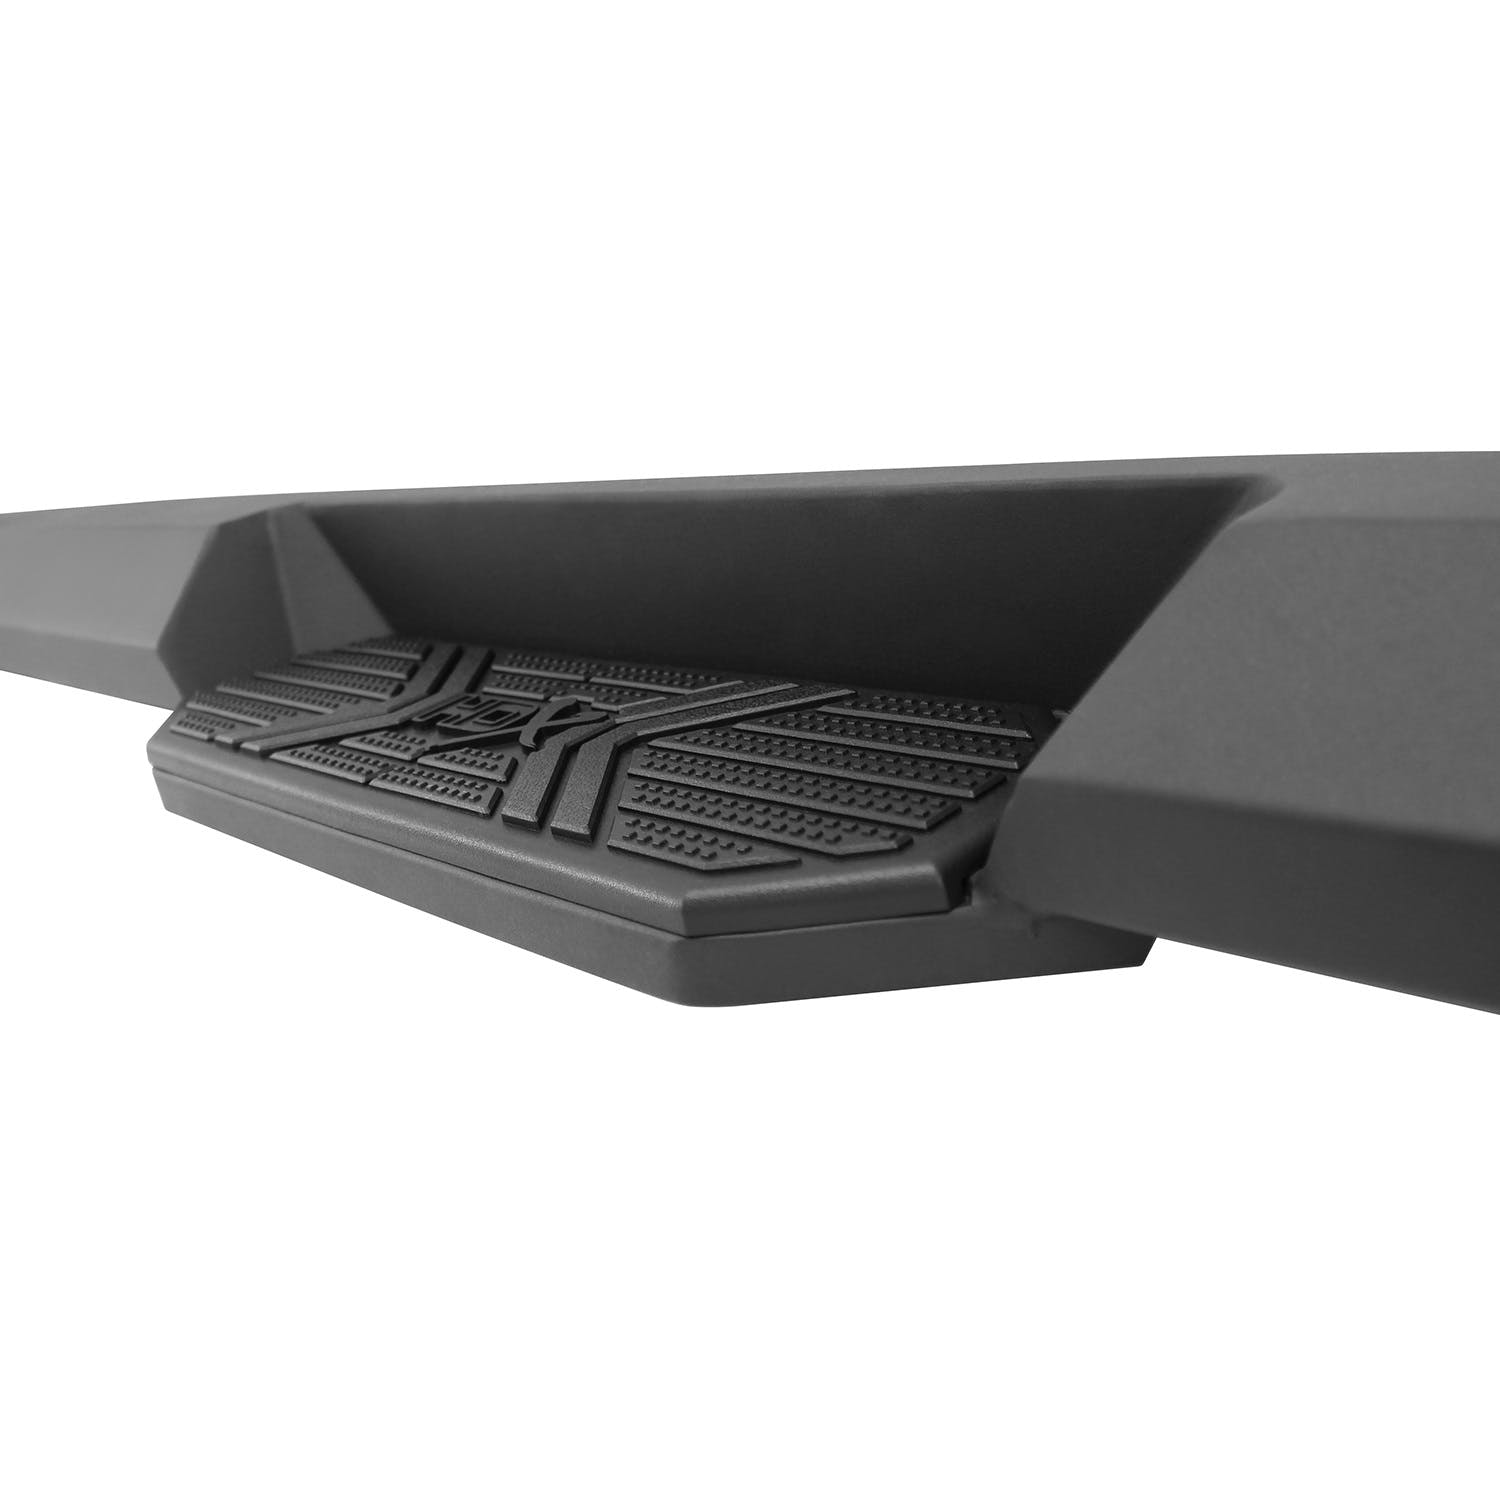 Westin Automotive 56-22775 HDX Xtreme Nerf Step Bars Textured Black